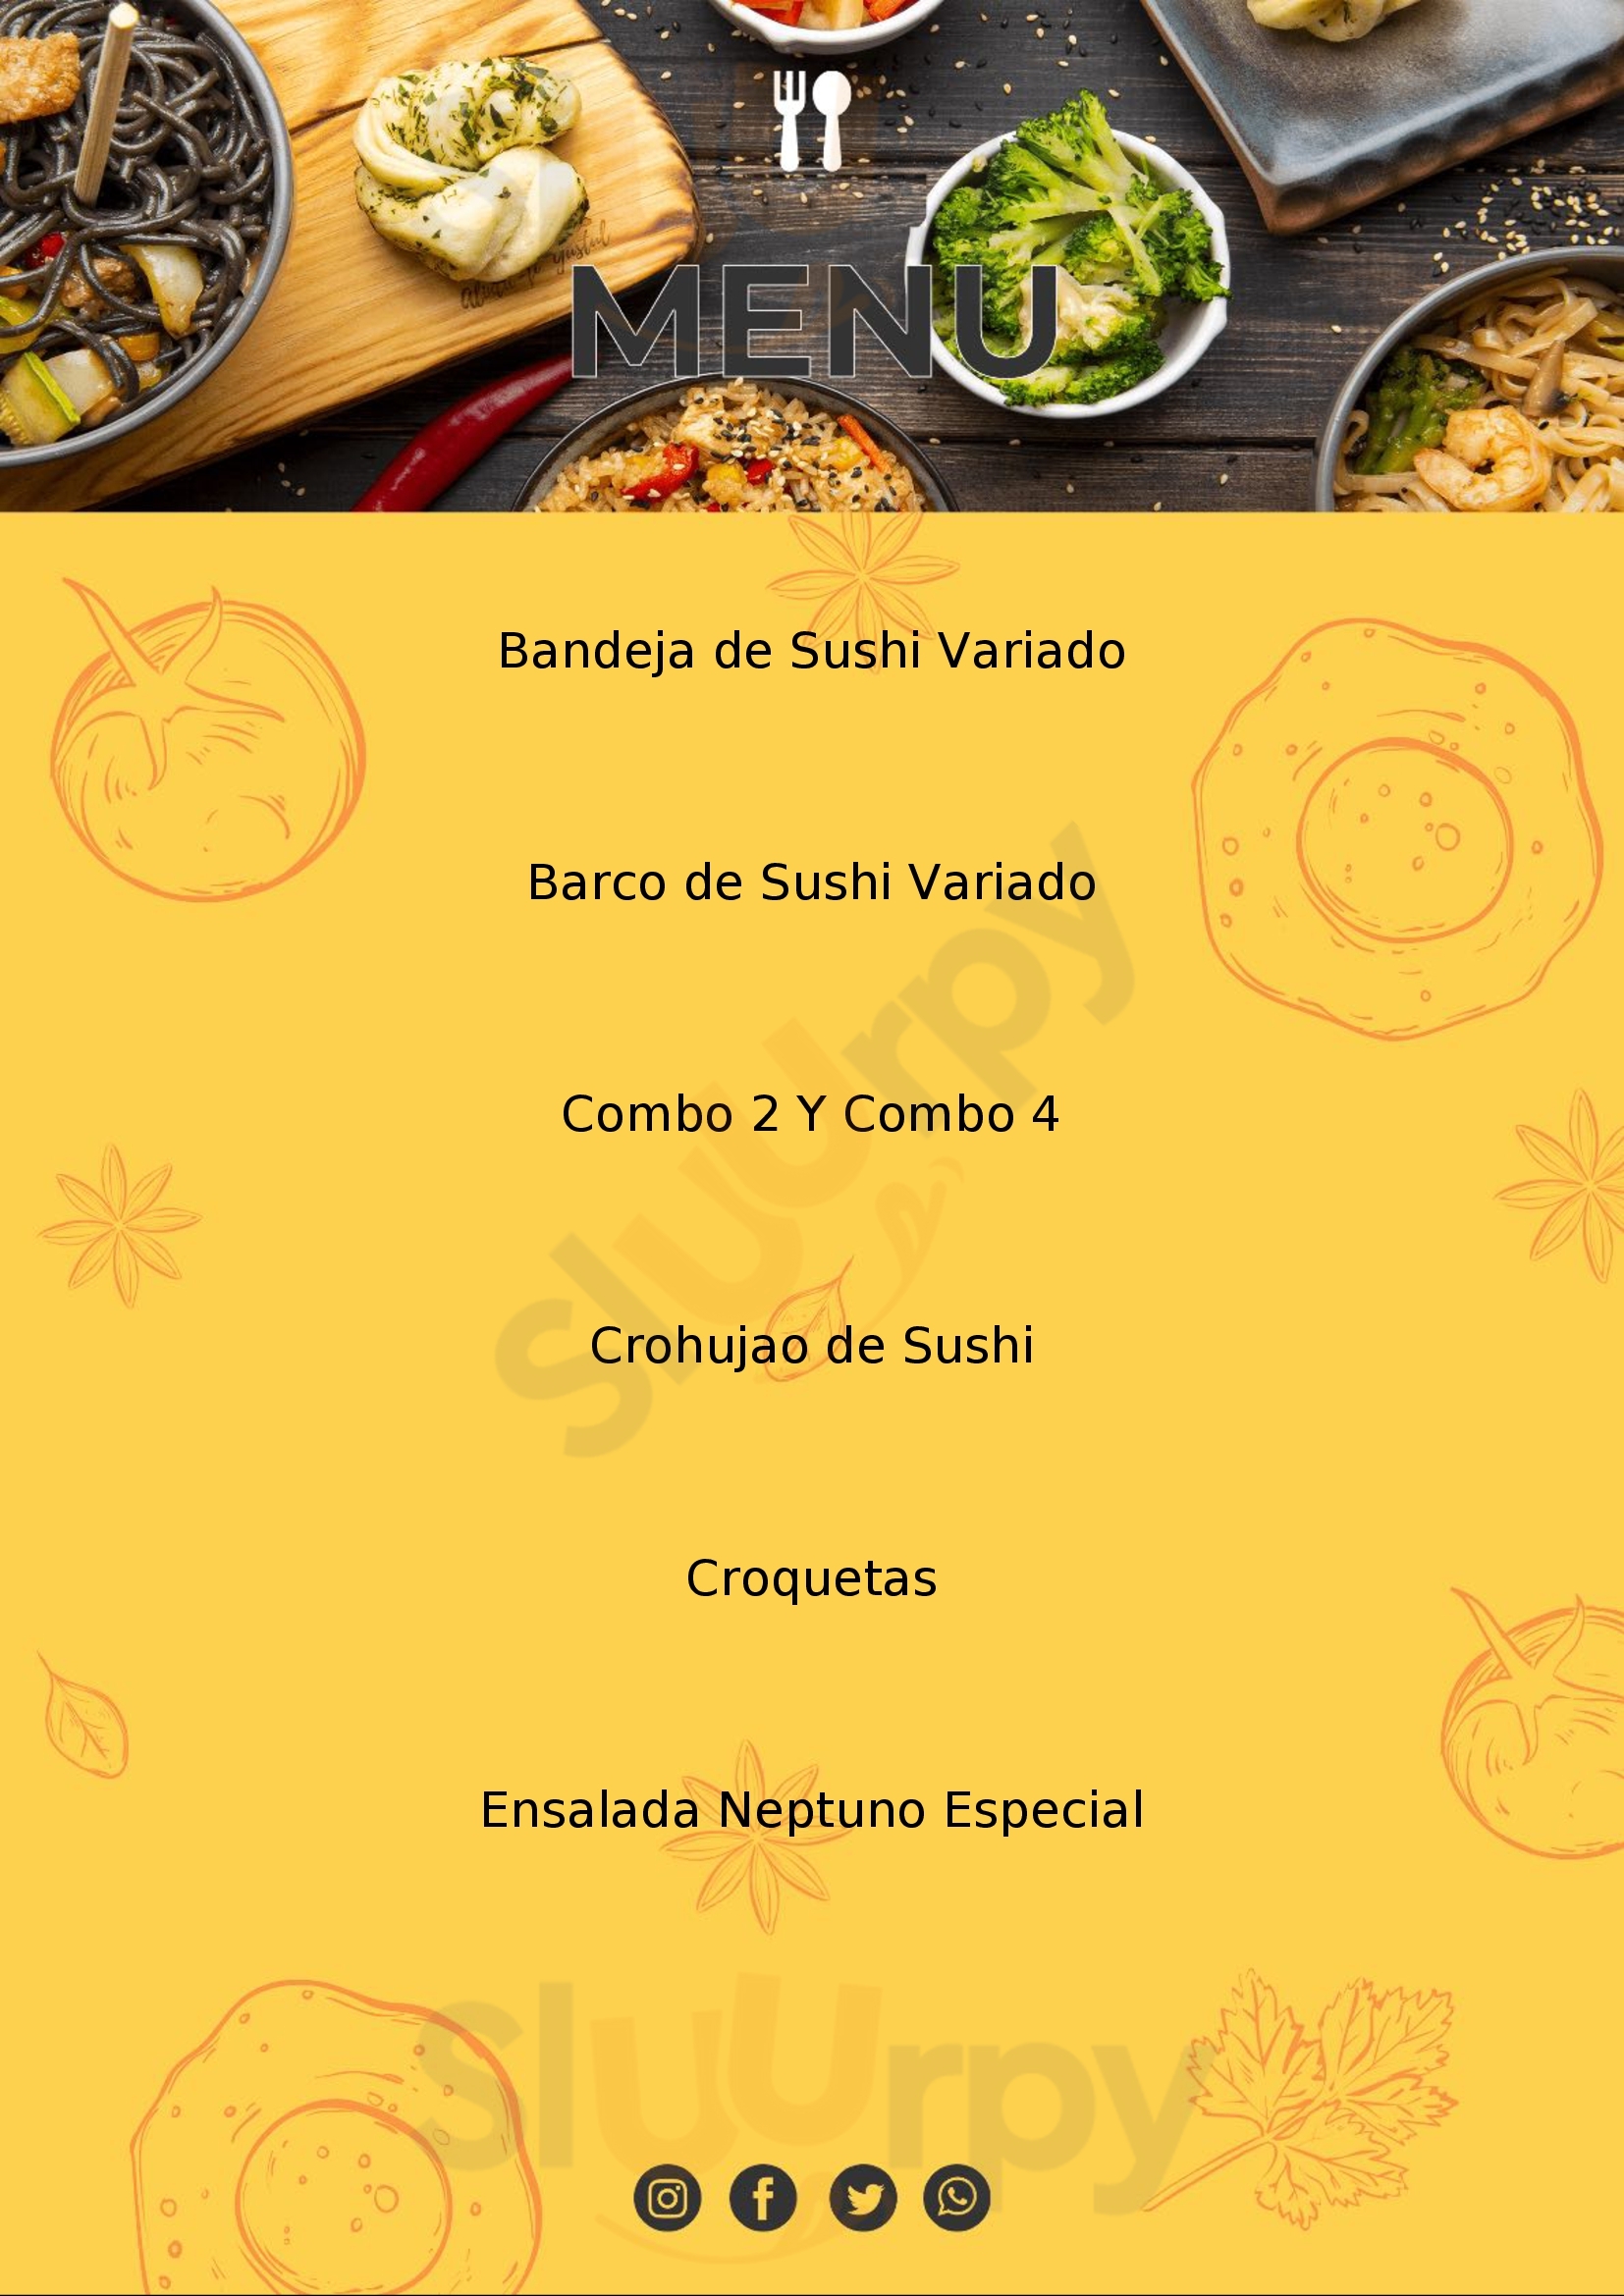 Fujiyama Sushi Bar & Asian Cuisine Caracas Menu - 1